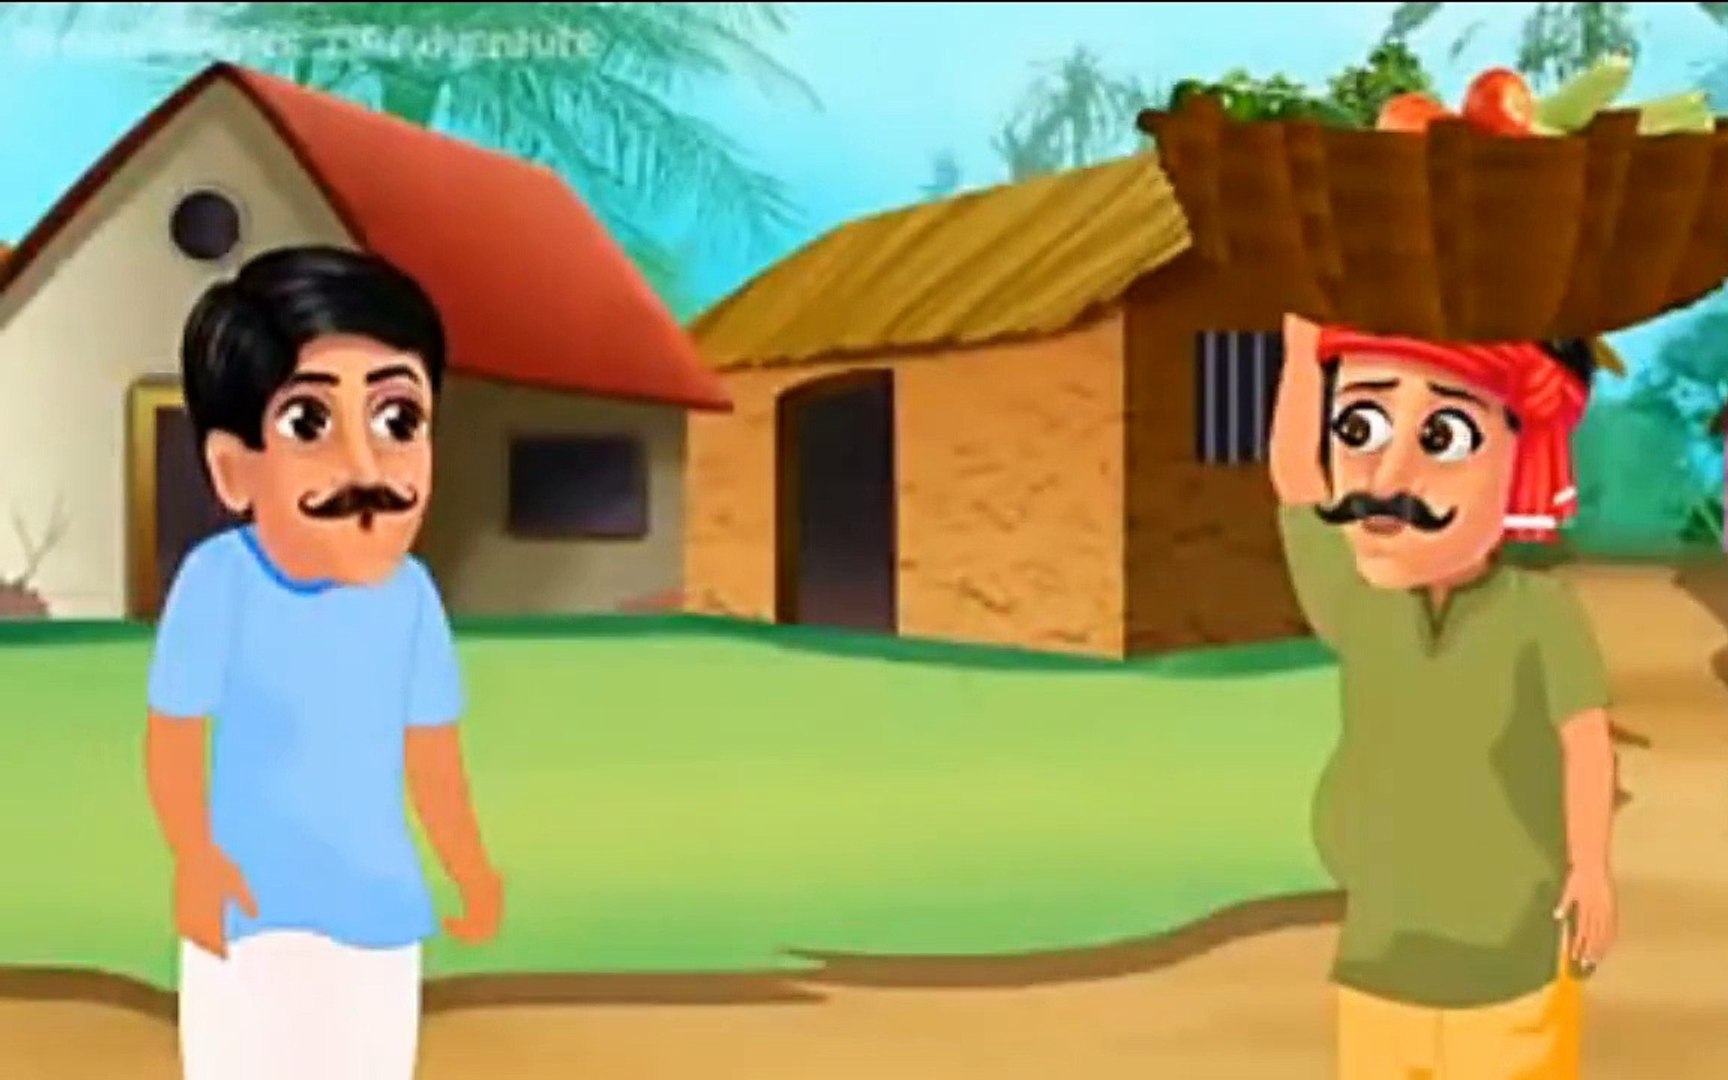 Cartoon story in Hindi - video Dailymotion